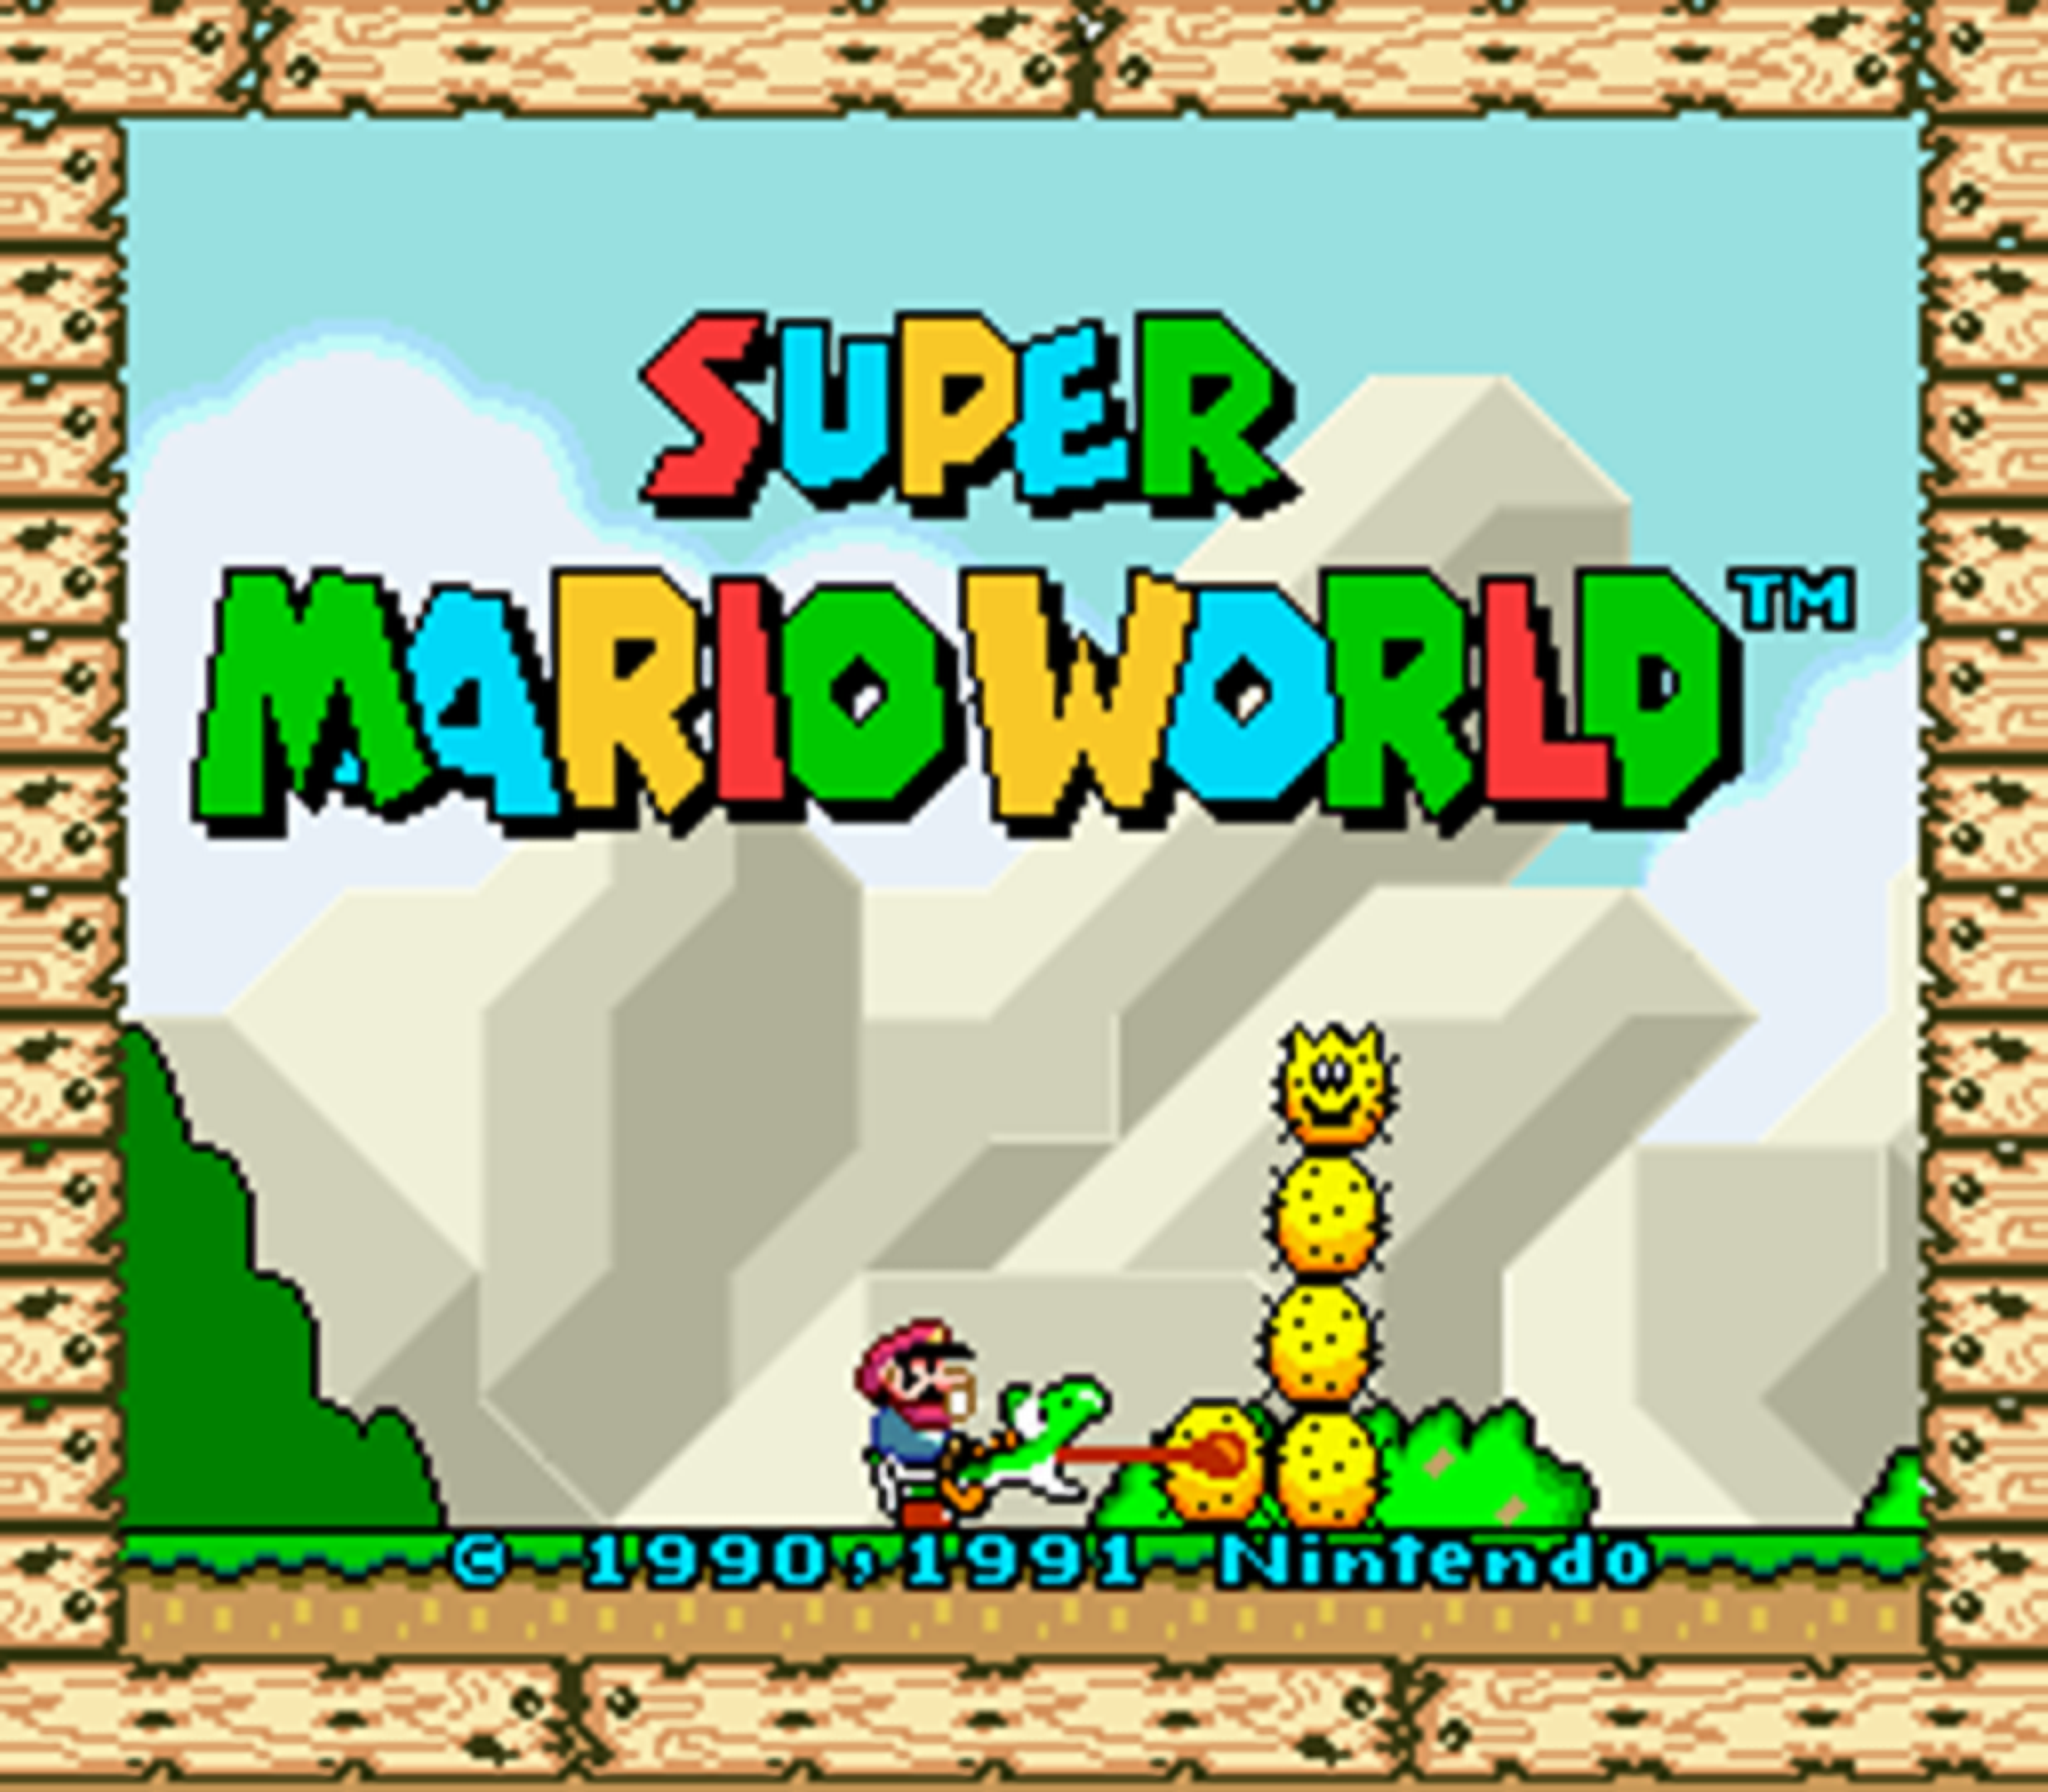 07 - Super Mario World.png